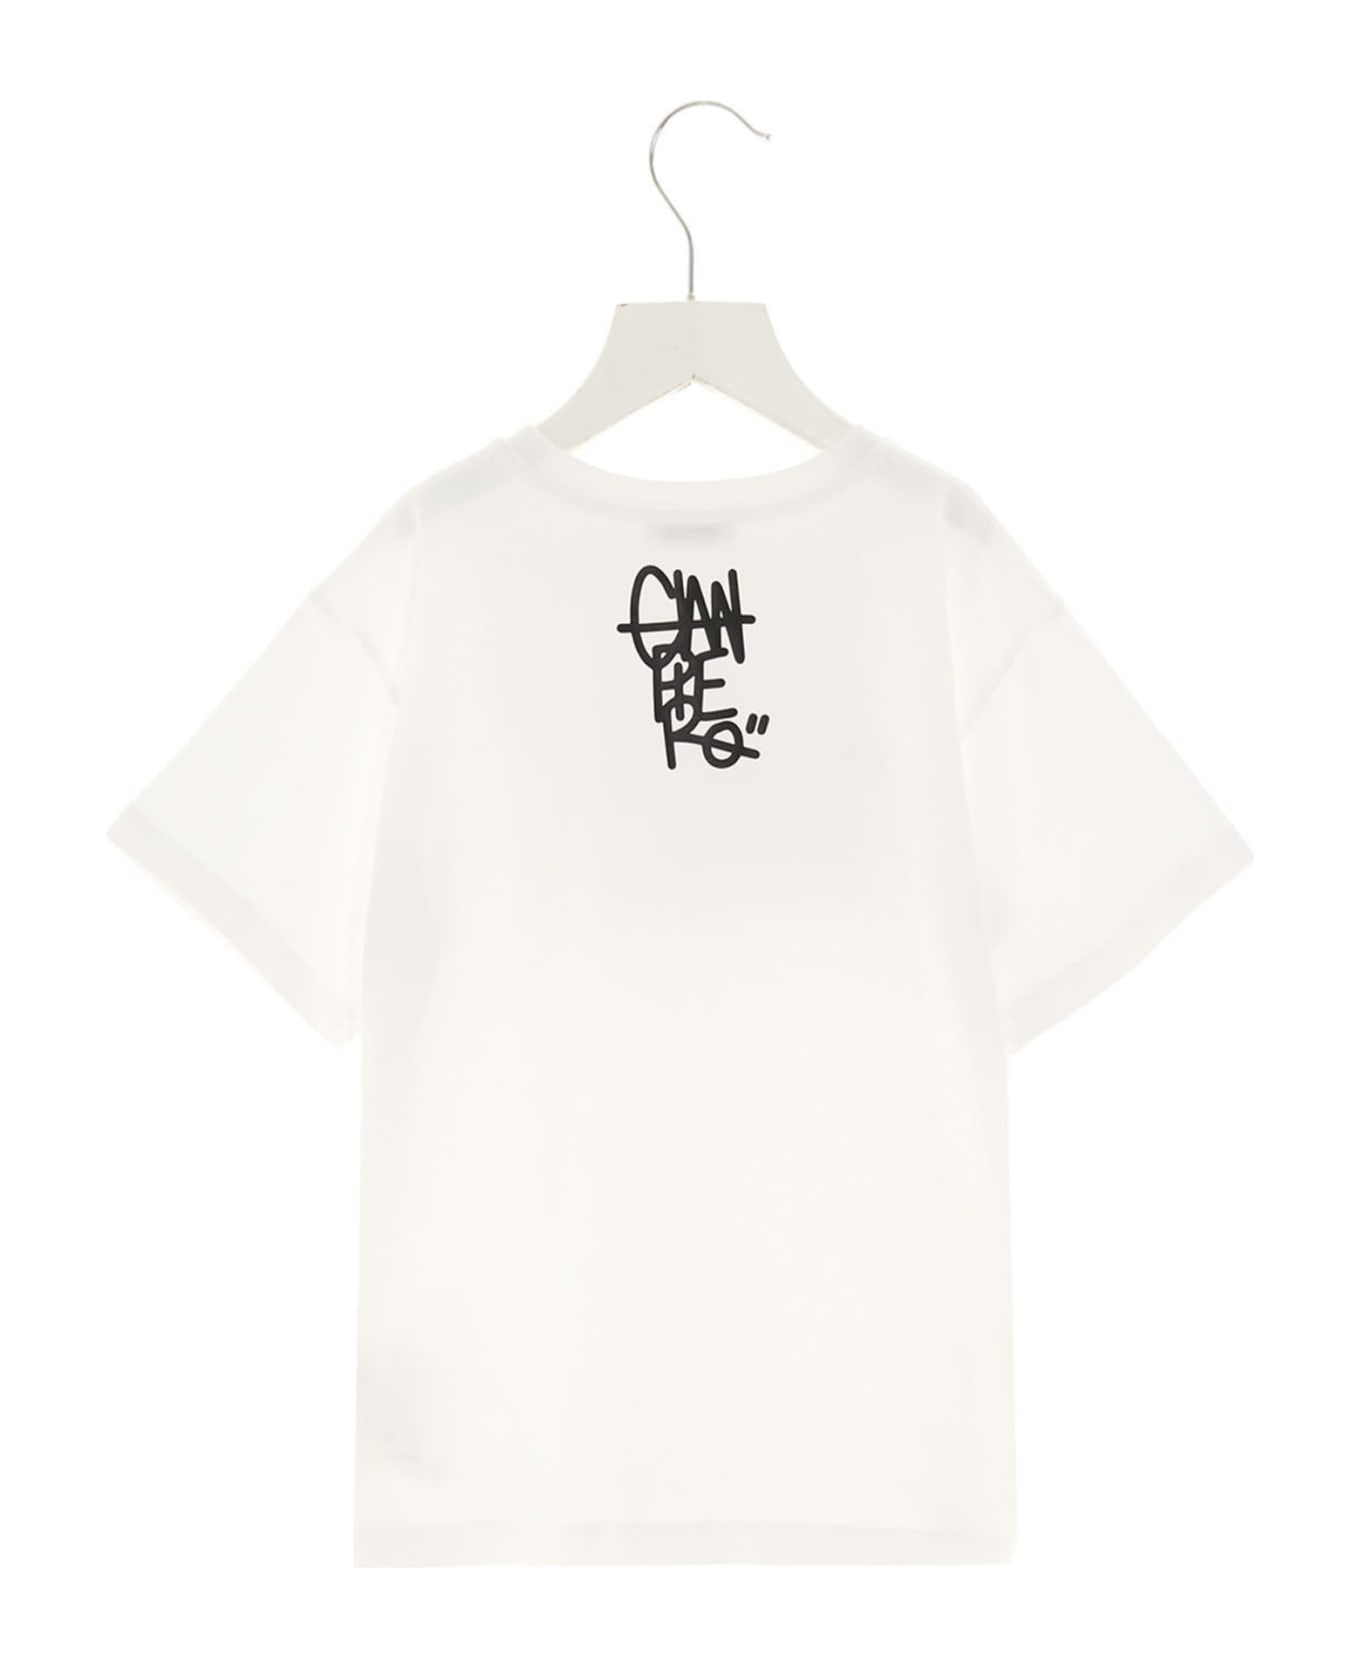 Dolce & Gabbana Gianpiero D'alessandro Collab T-shirt - White